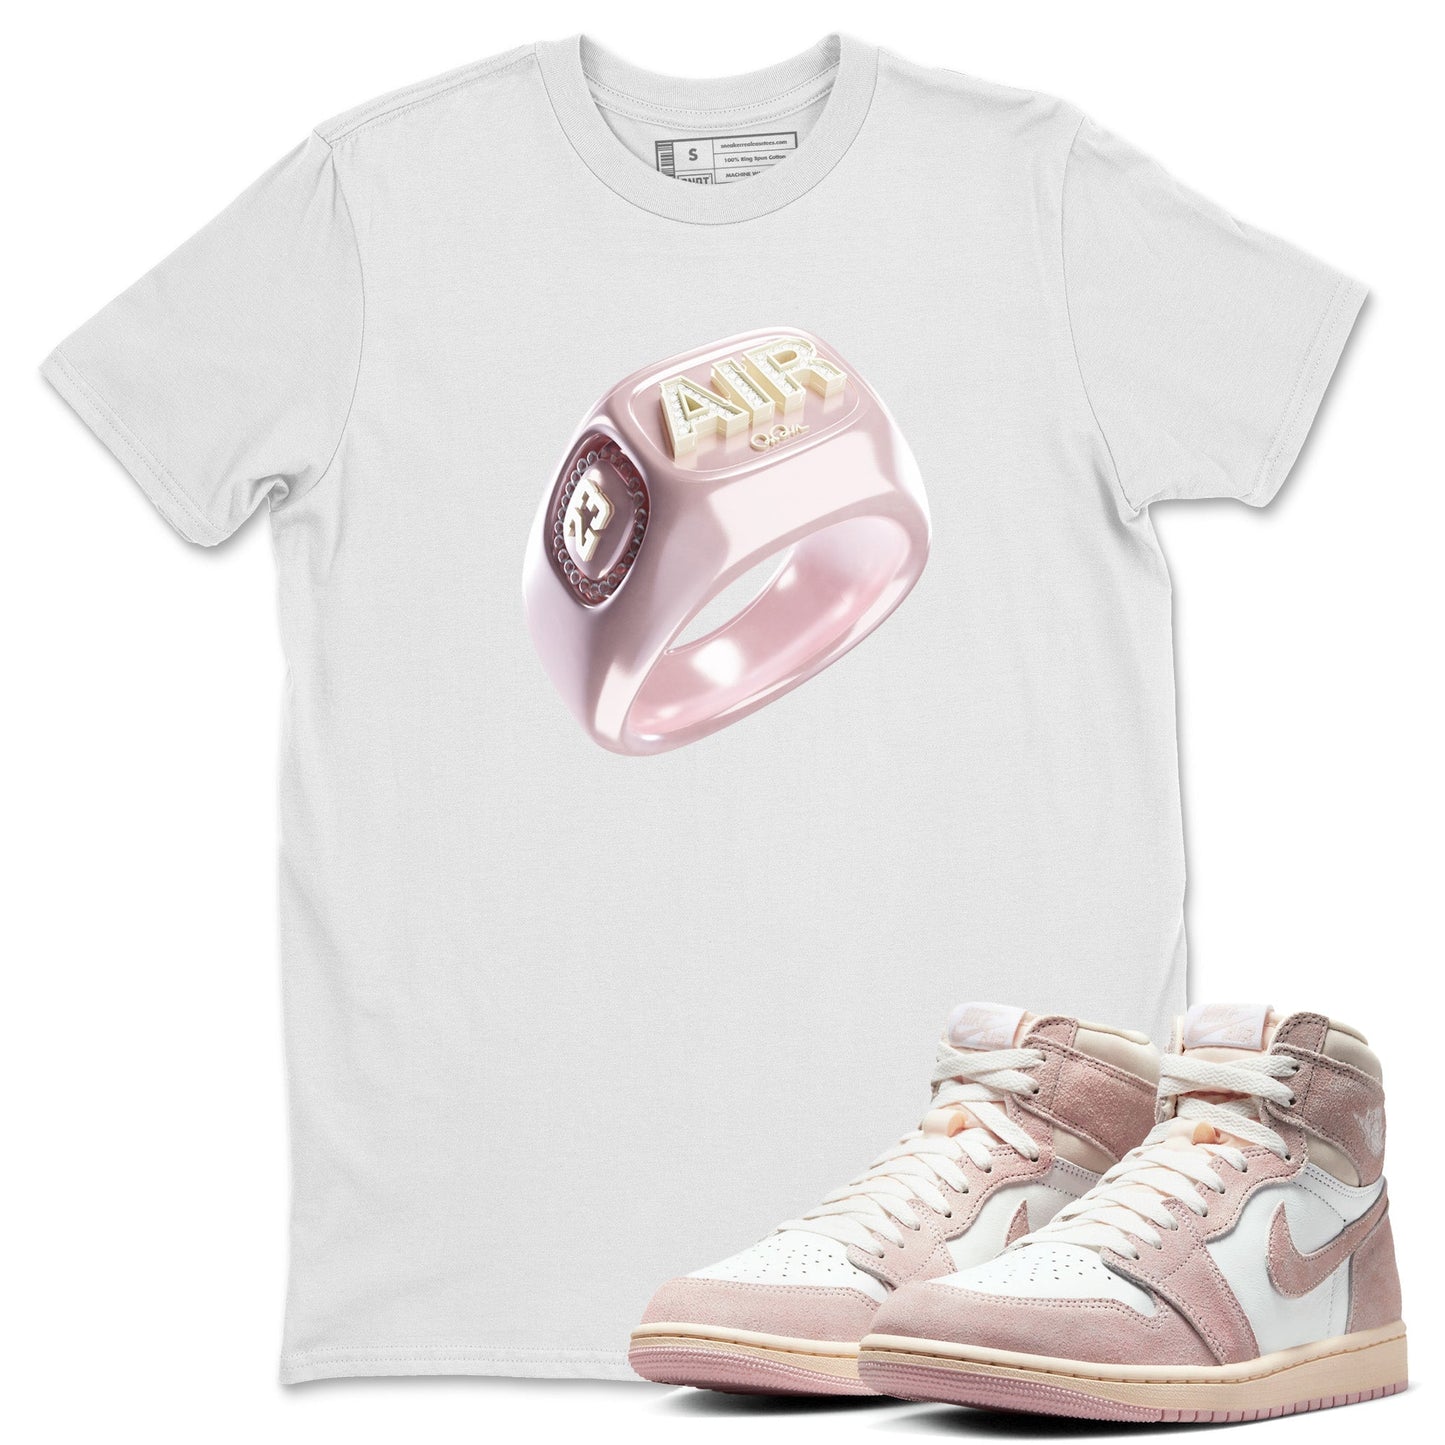 AJ1 Retro High OG Washed Pink Sneaker Tees Drip Gear Zone Diamond Ring Sneaker Tees AJ1 Retro High OG Washed Pink Shirt Unisex Shirts White 1